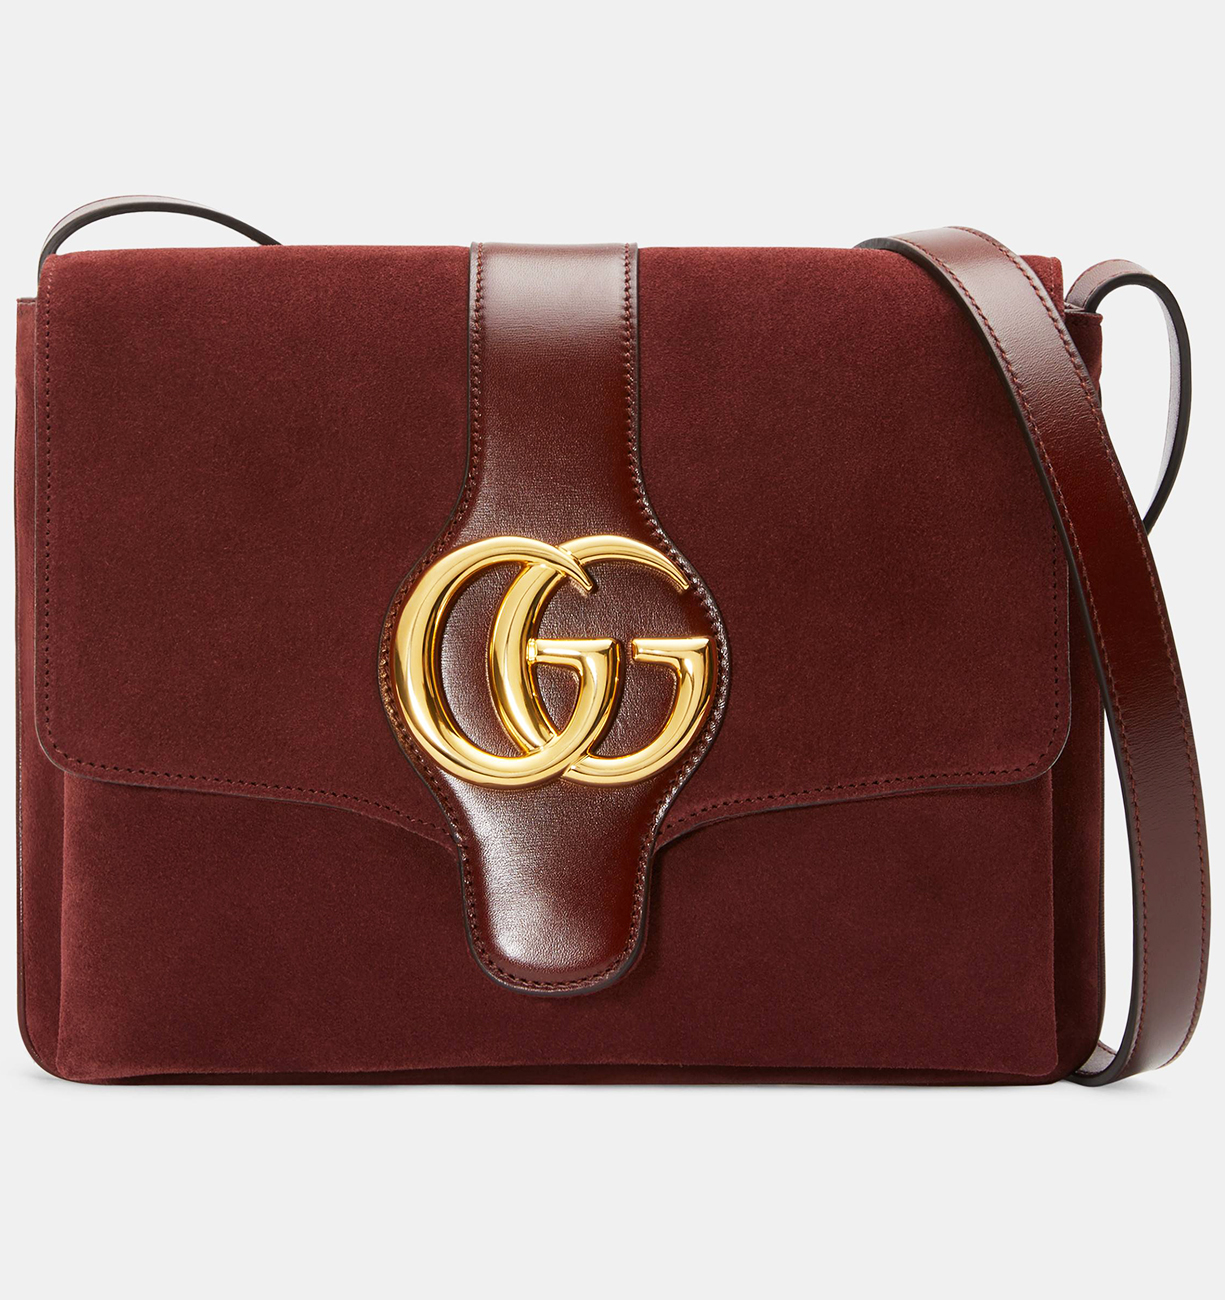 2019 gucci handbags